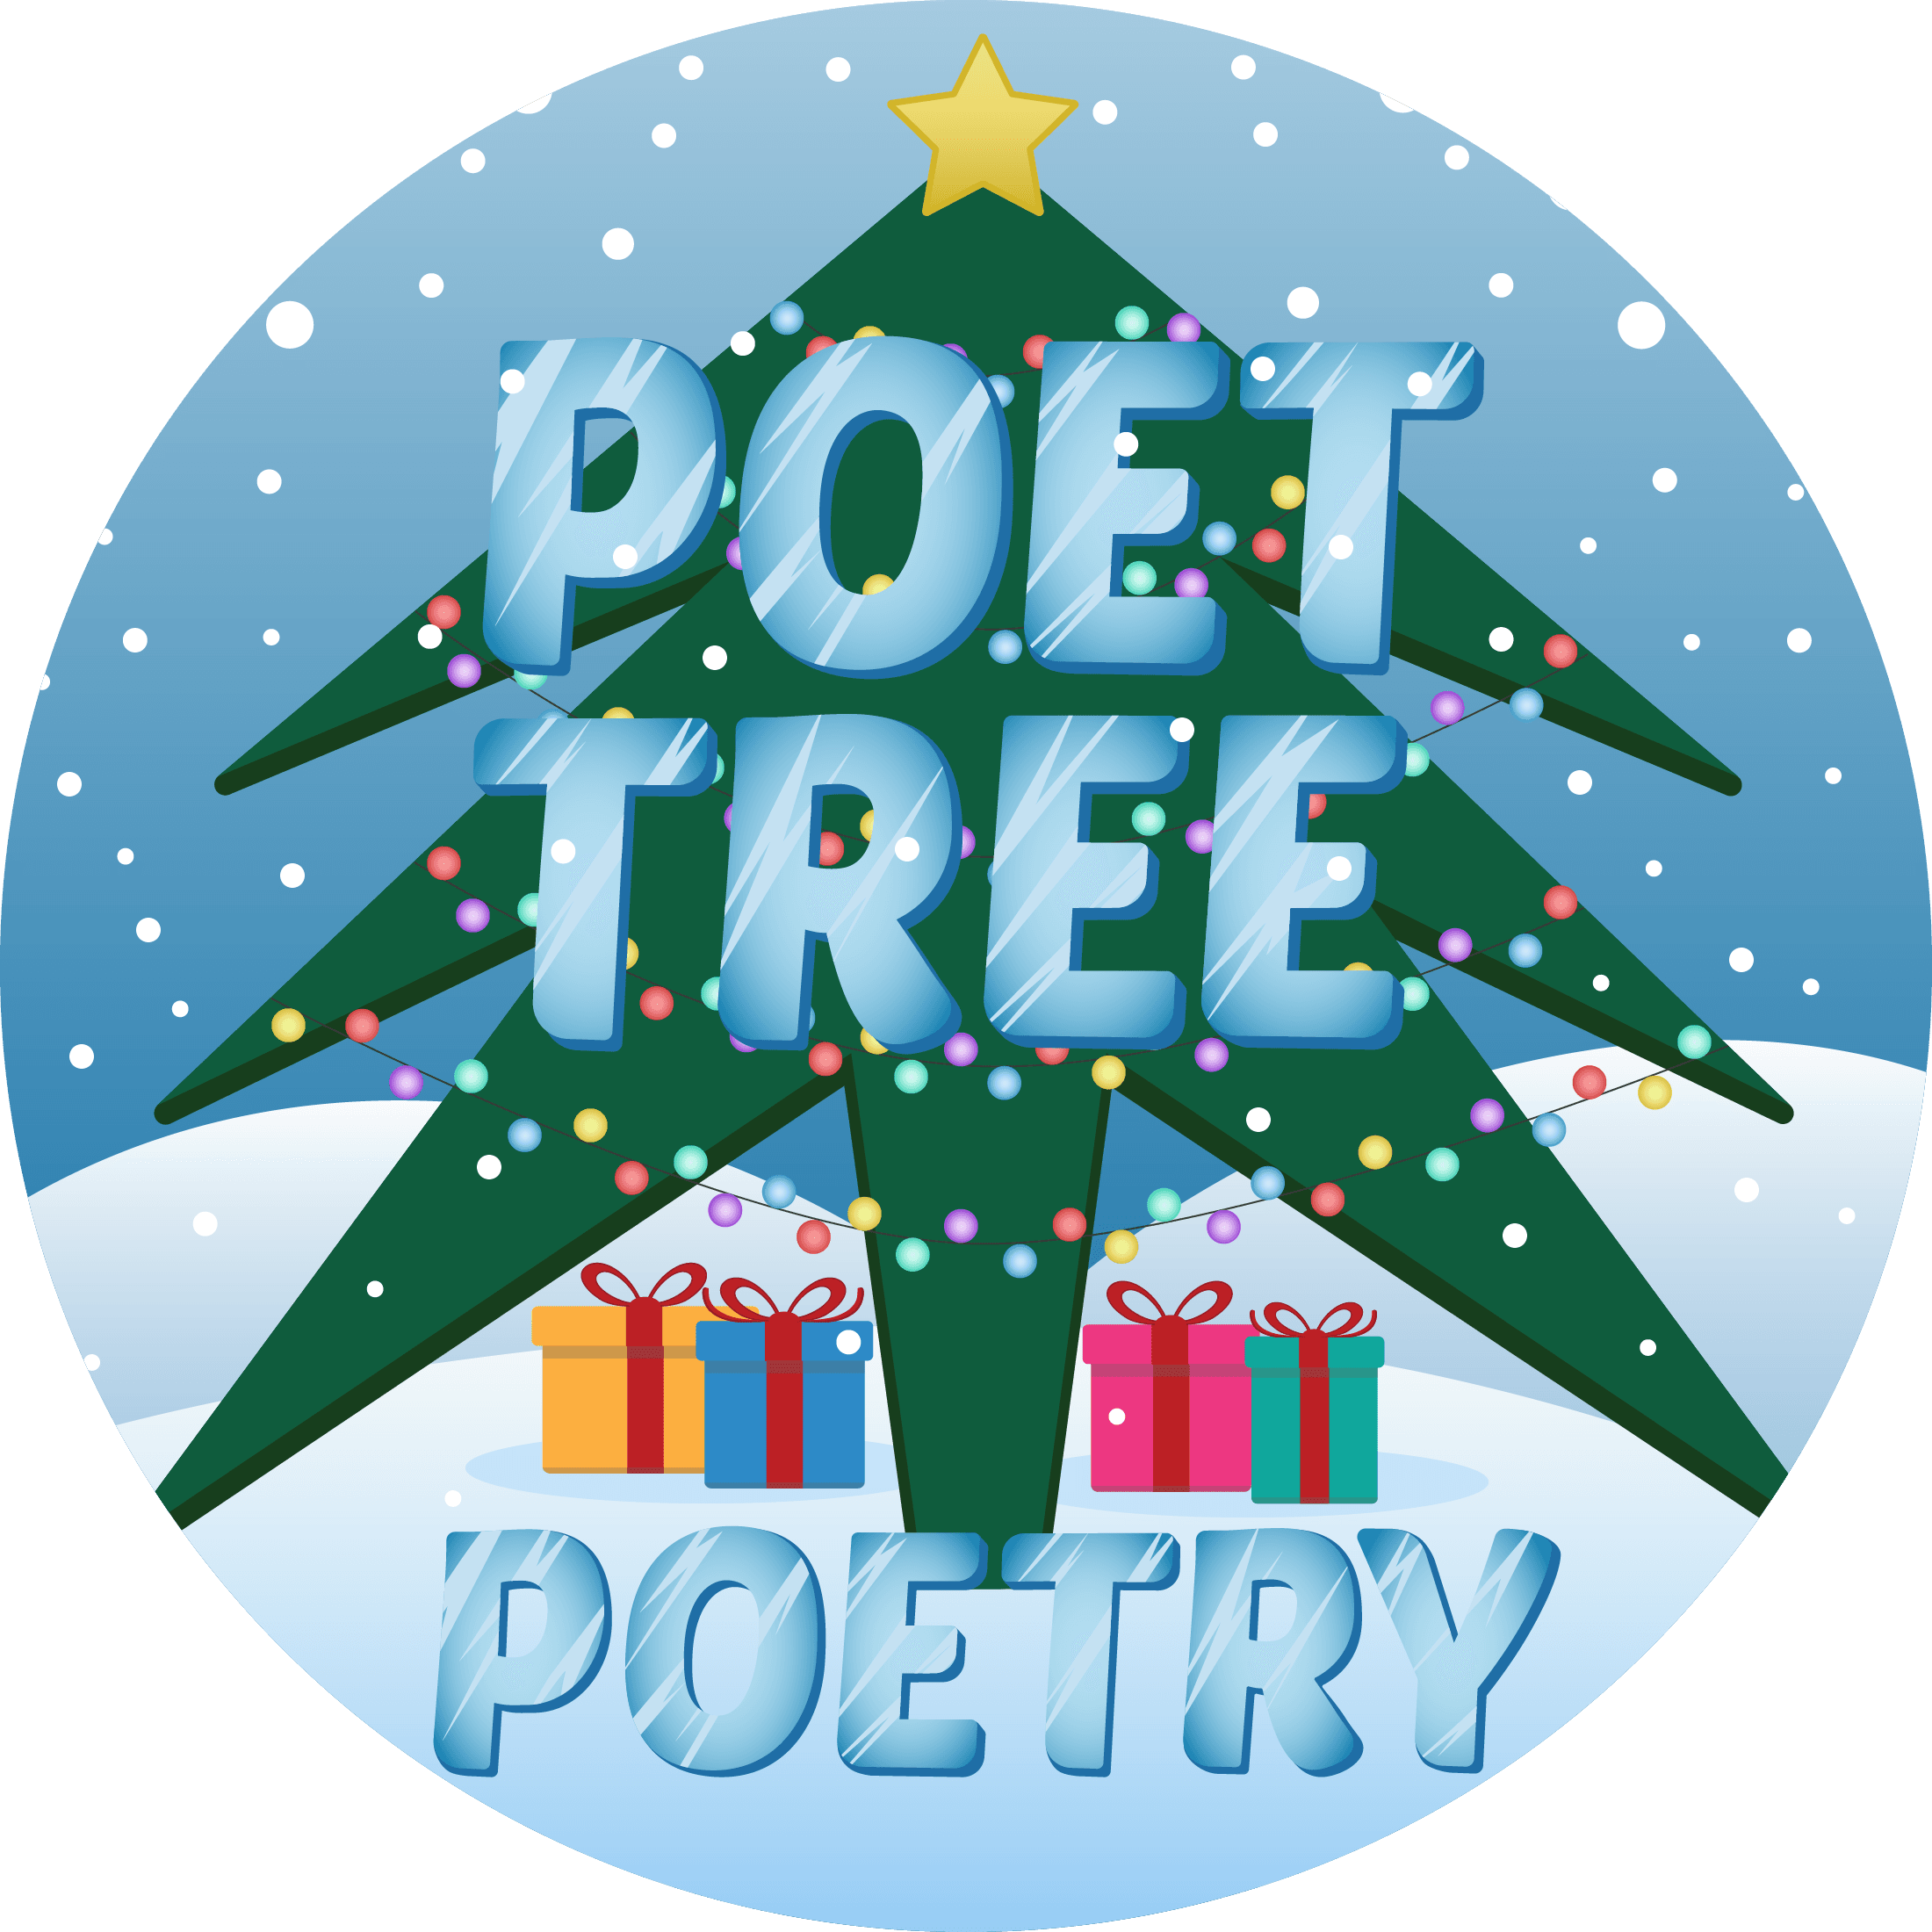 Poet Tree Poetry - Winter Bells